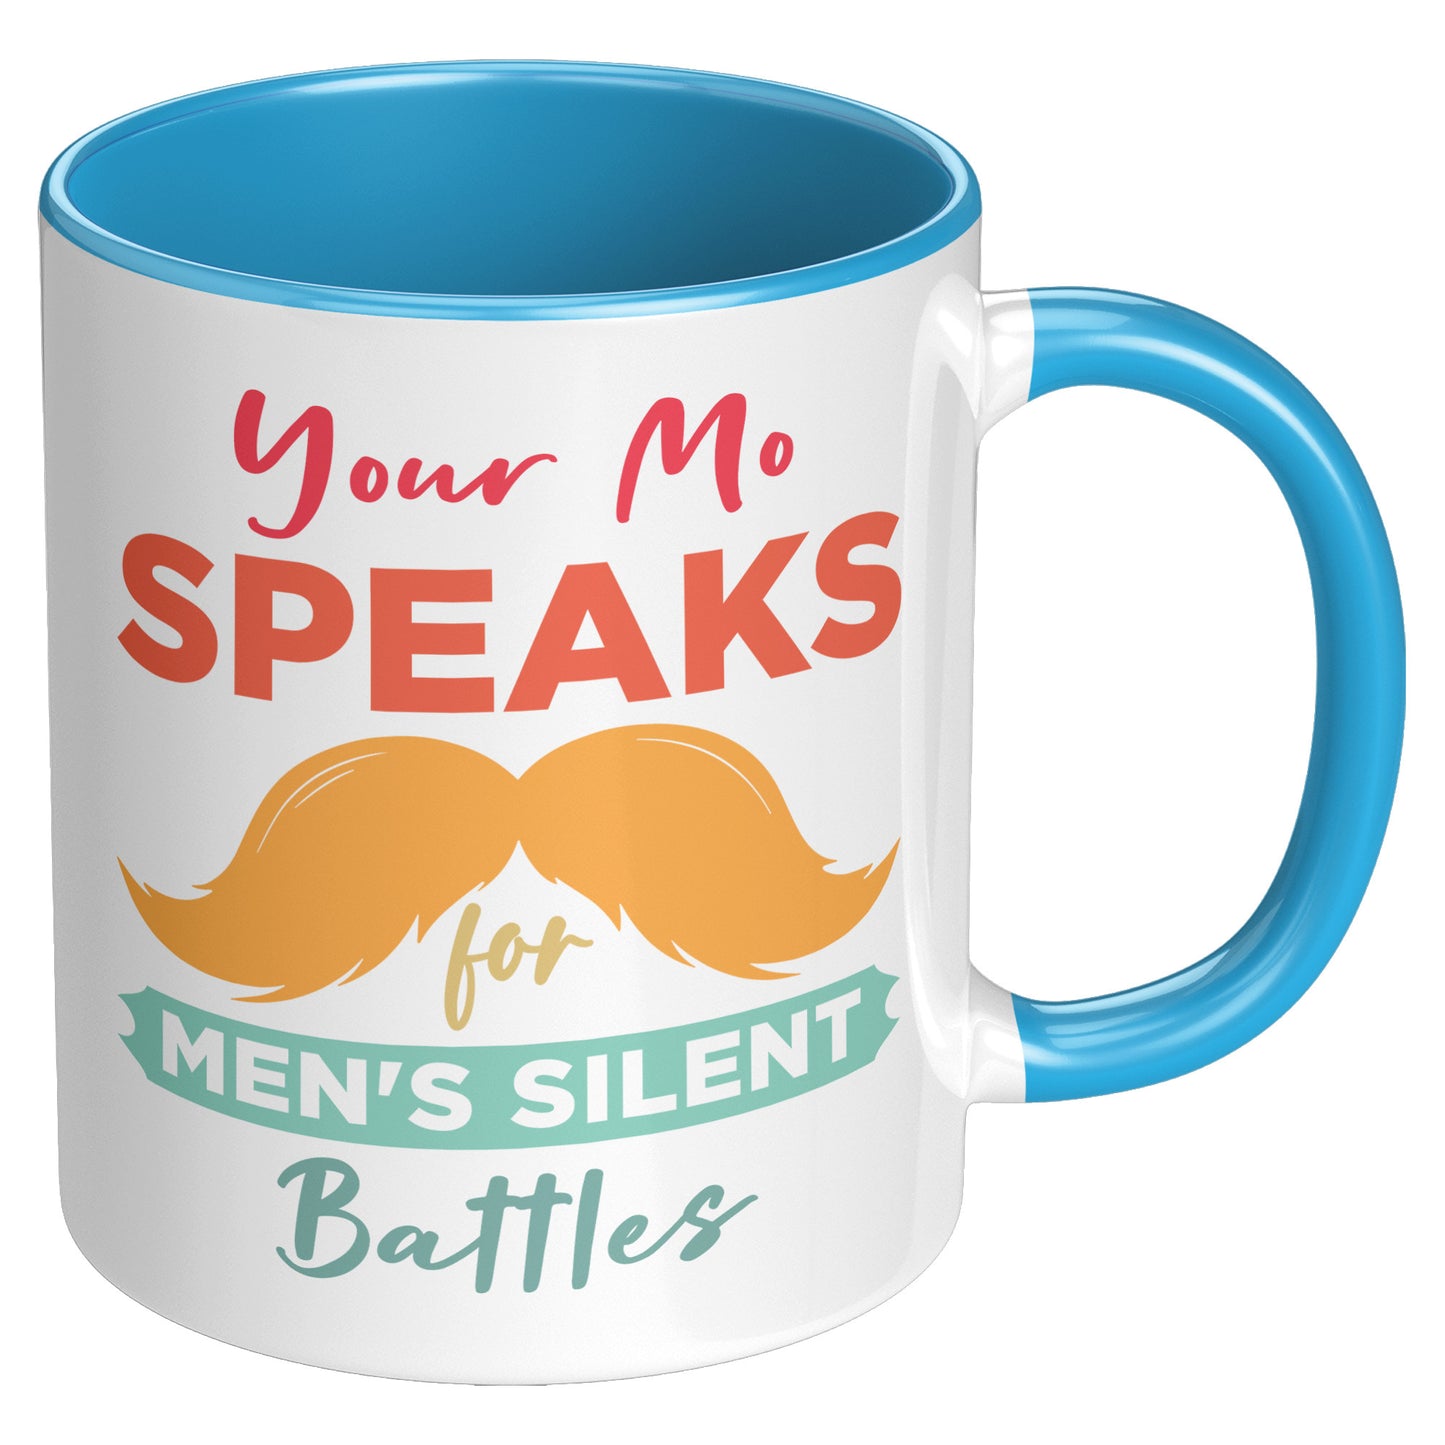 11oz Accent Mug Movember Your Mo Speaks For Men's Silent Battles Right-Handed